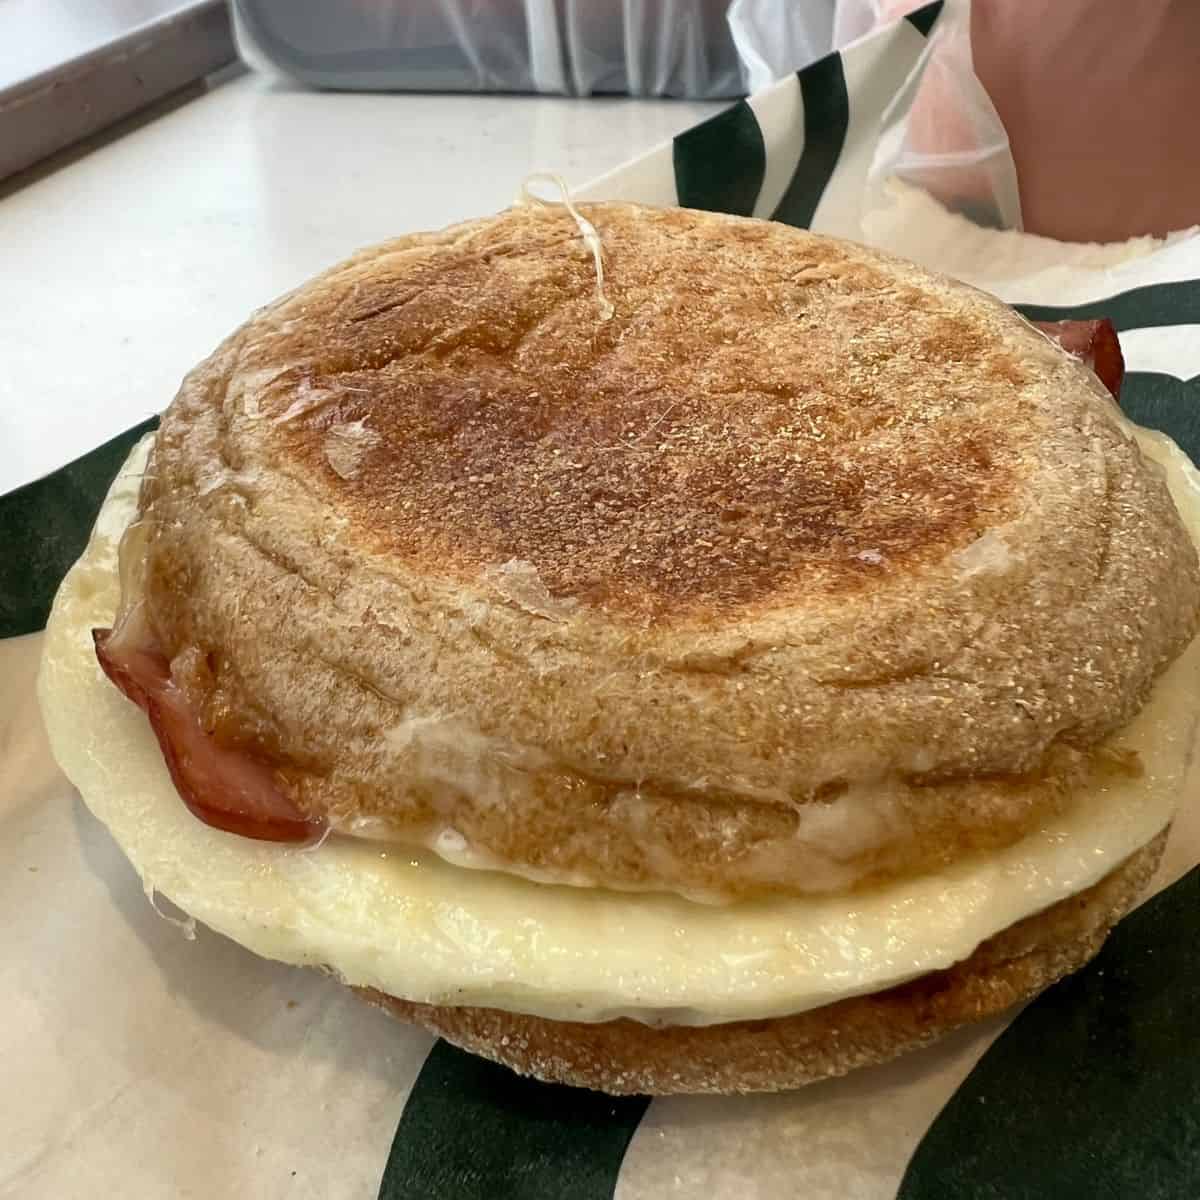 Egg white and turkey bacon sandwich at Starbucks. 